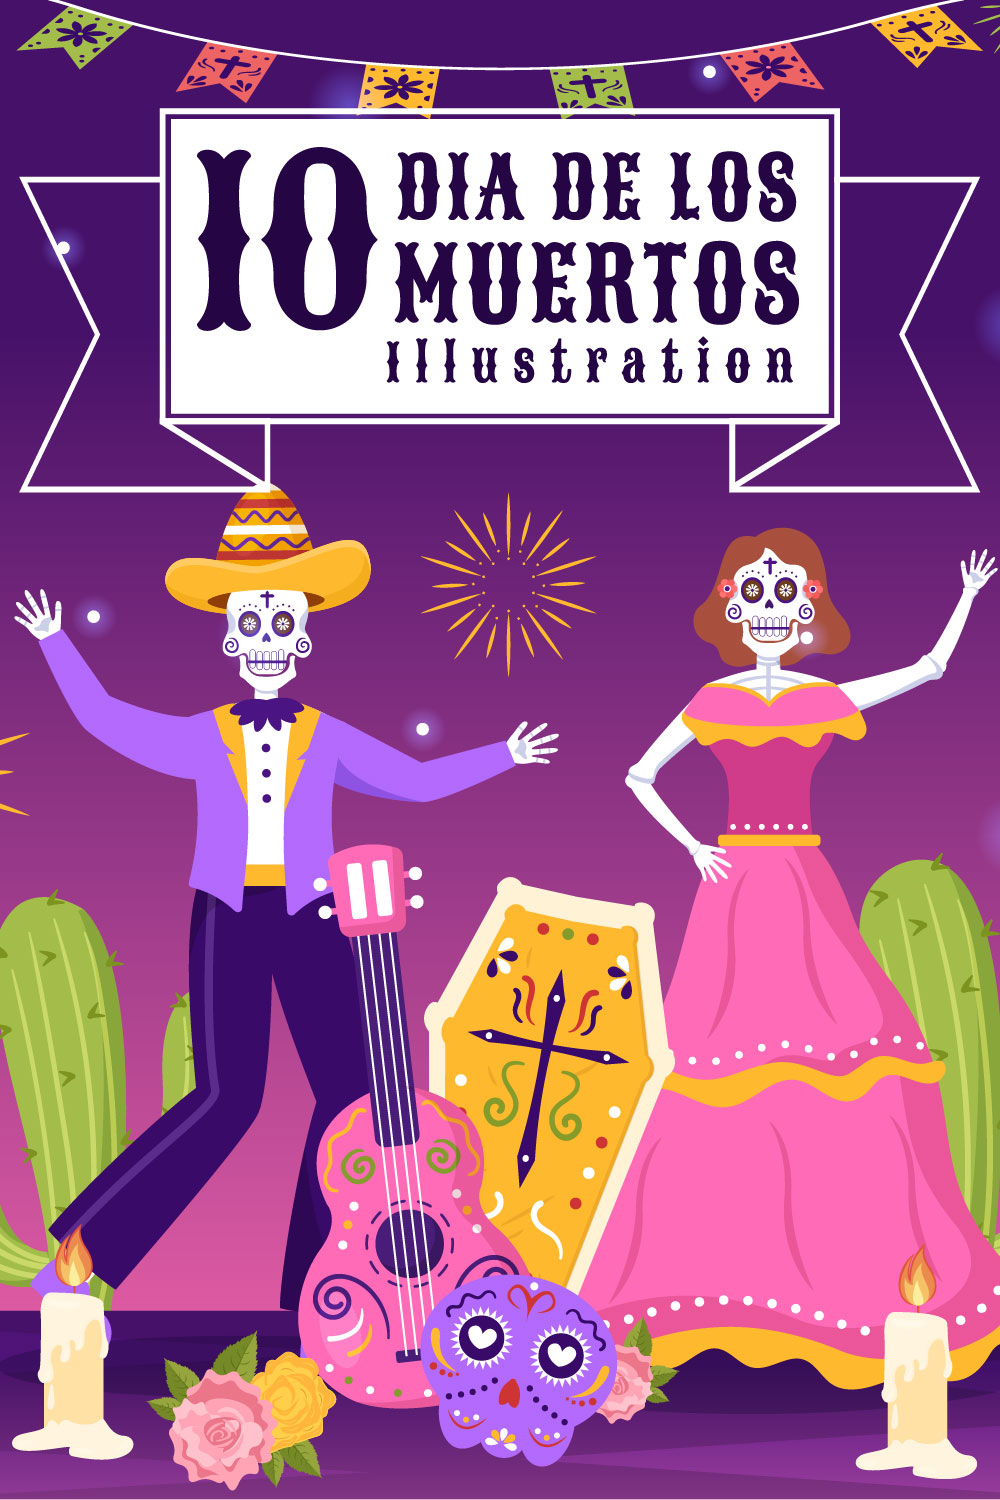 10 Dia De Los Muertos or Day of the Dead Illustration Pinterest Image.